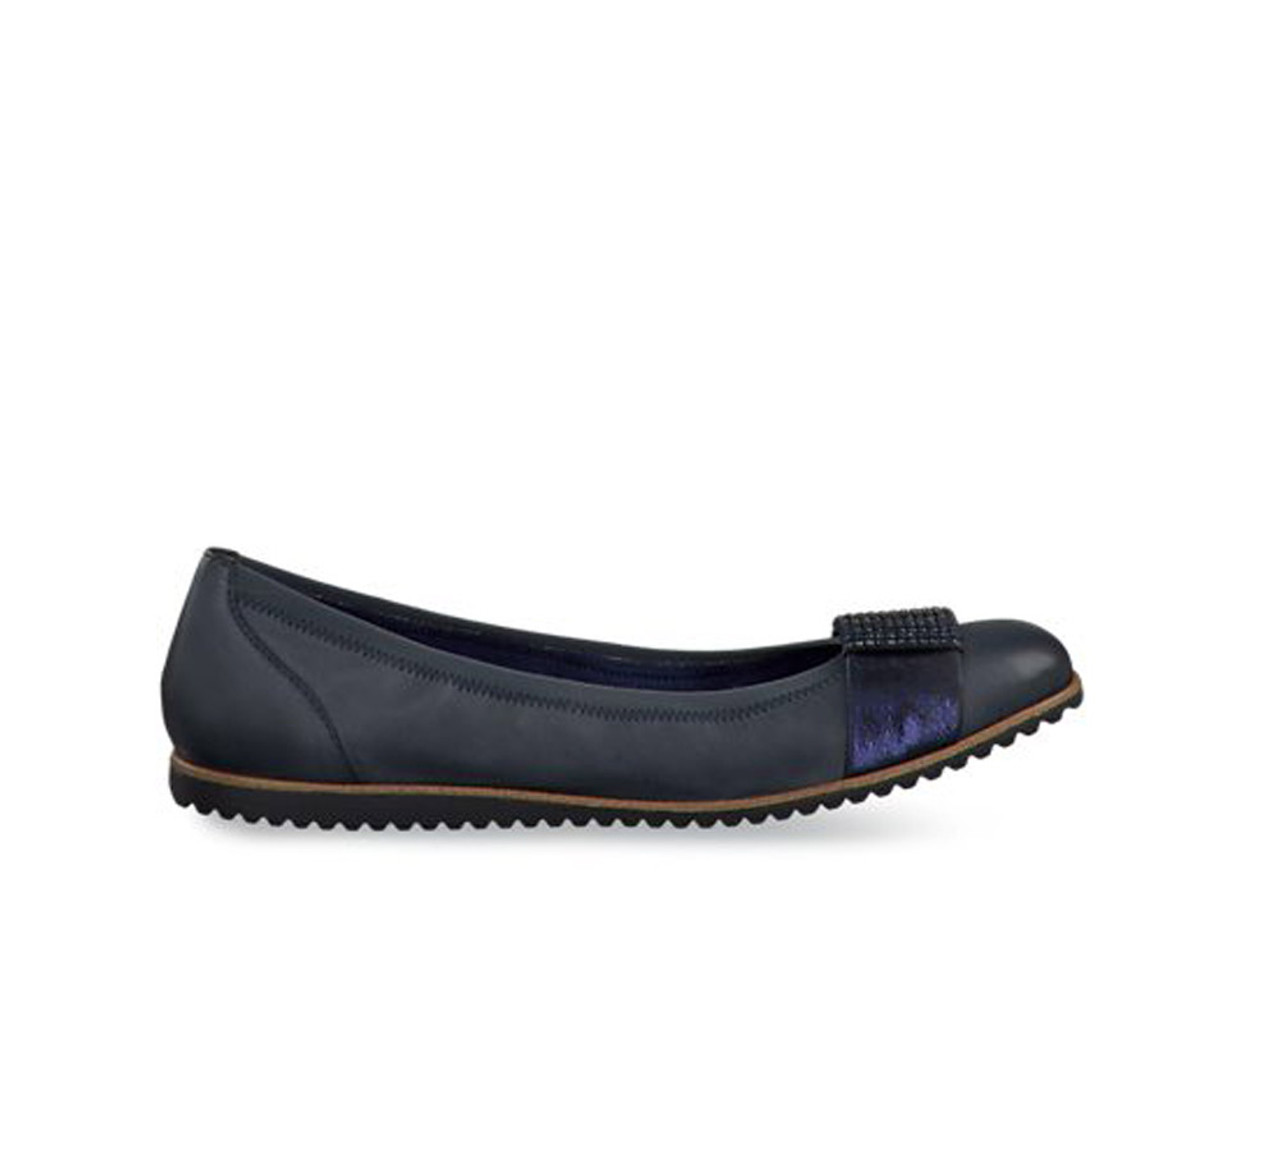 Tamaris Women's 22102 Flat - Blue | Discount Tamaris Ladies Shoes & More -  Shoolu.com | Shoolu.com